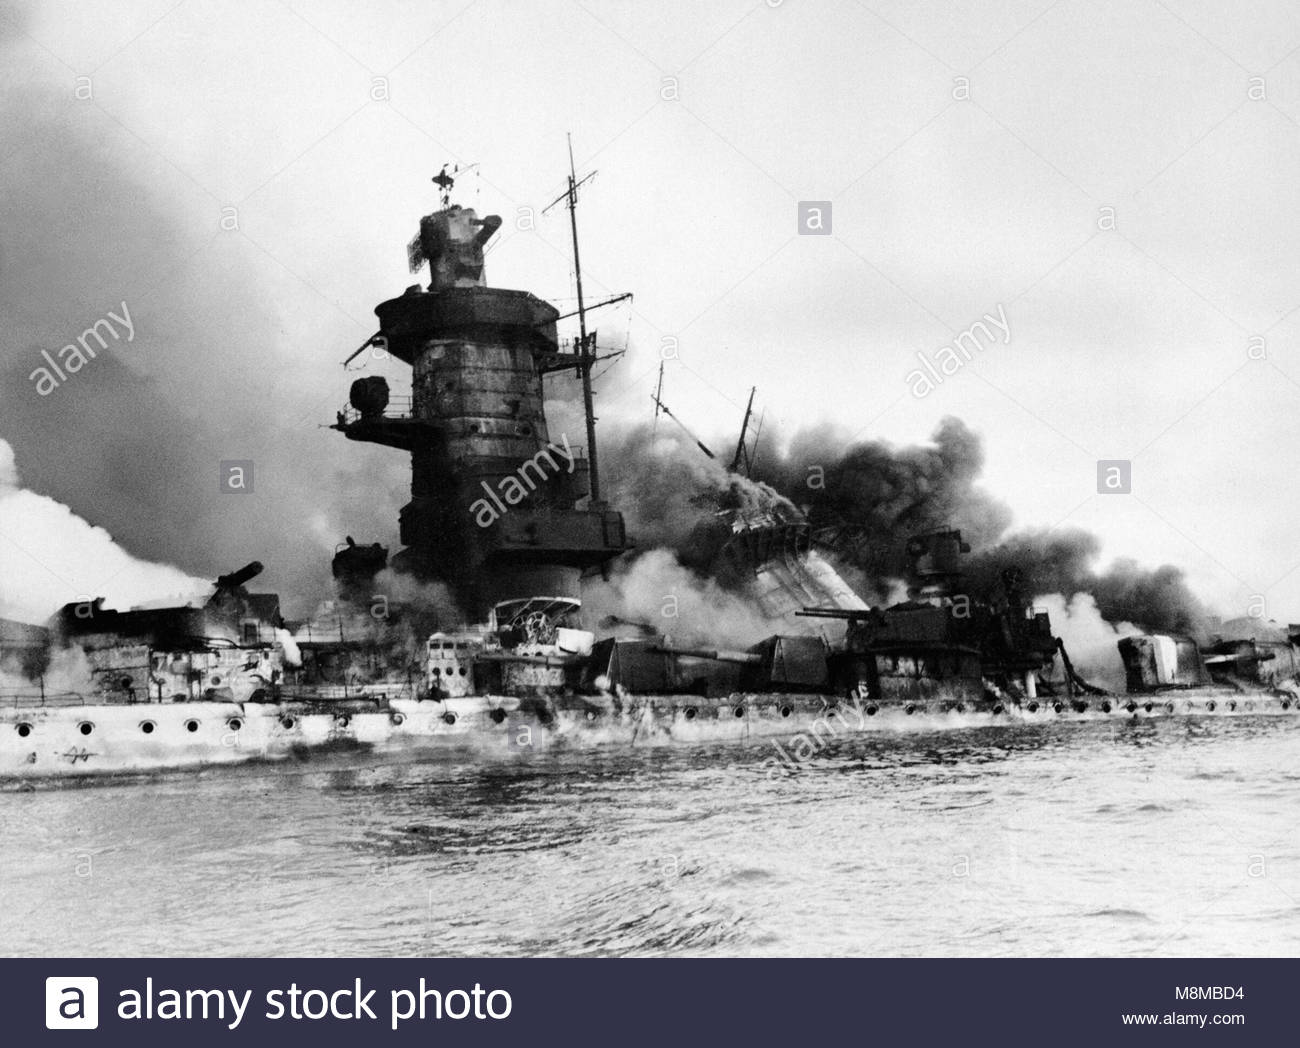 the-german-pocket-battleship-admiral-graf-spee-in-flames-after-being-M8MBD4.jpg